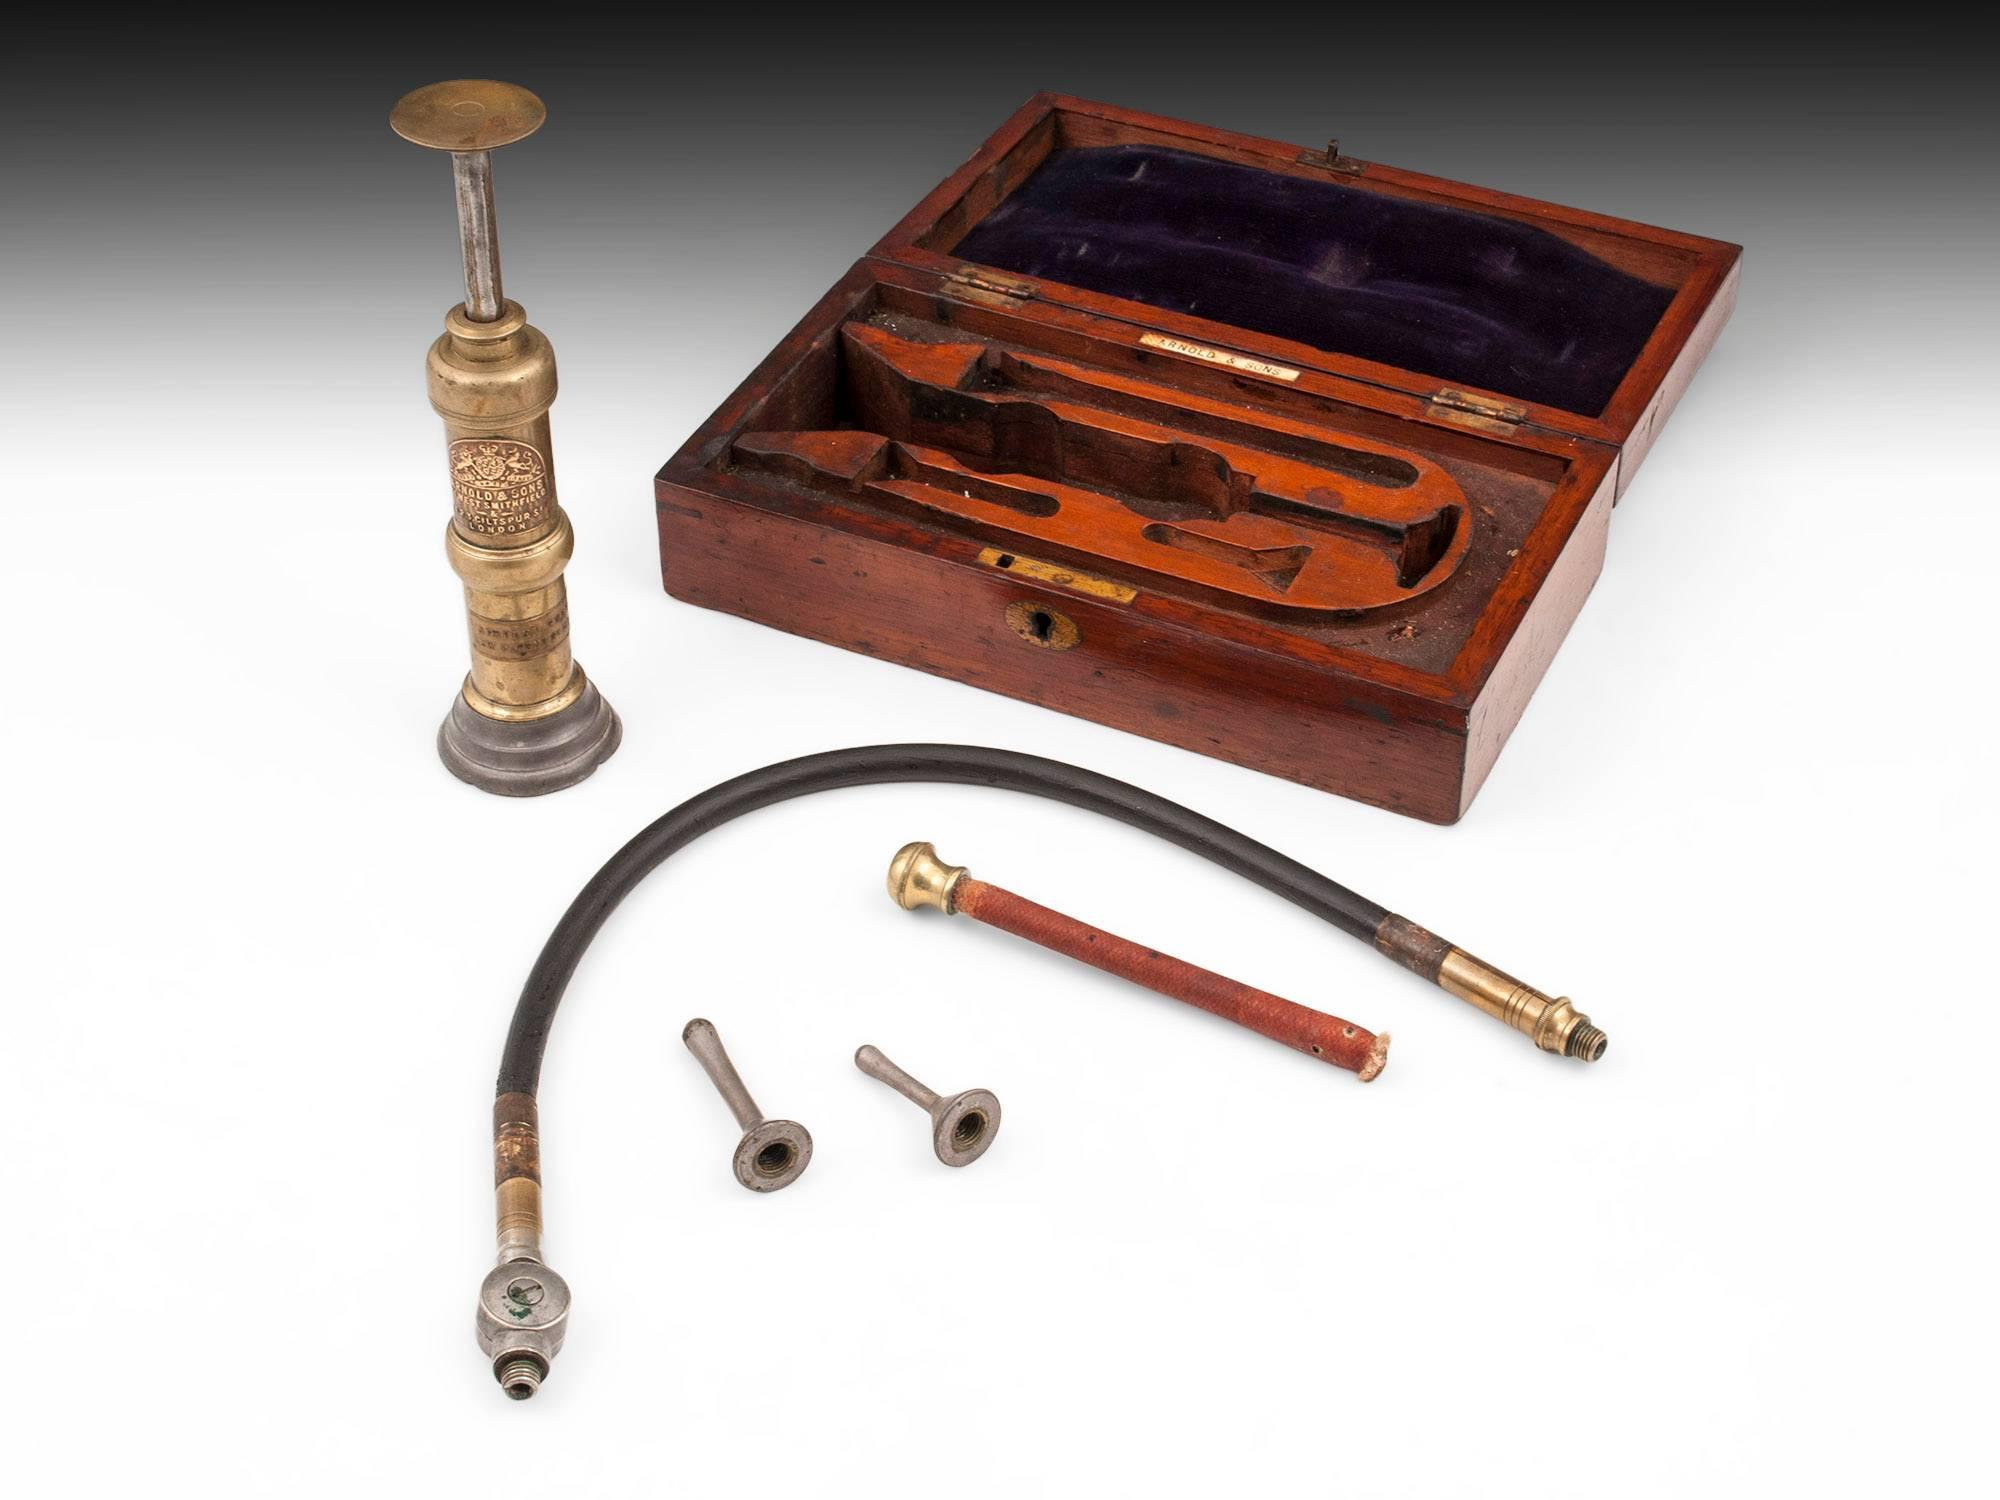 British Antique Medical Arnold & Sons Stomach Pump and Enema Set